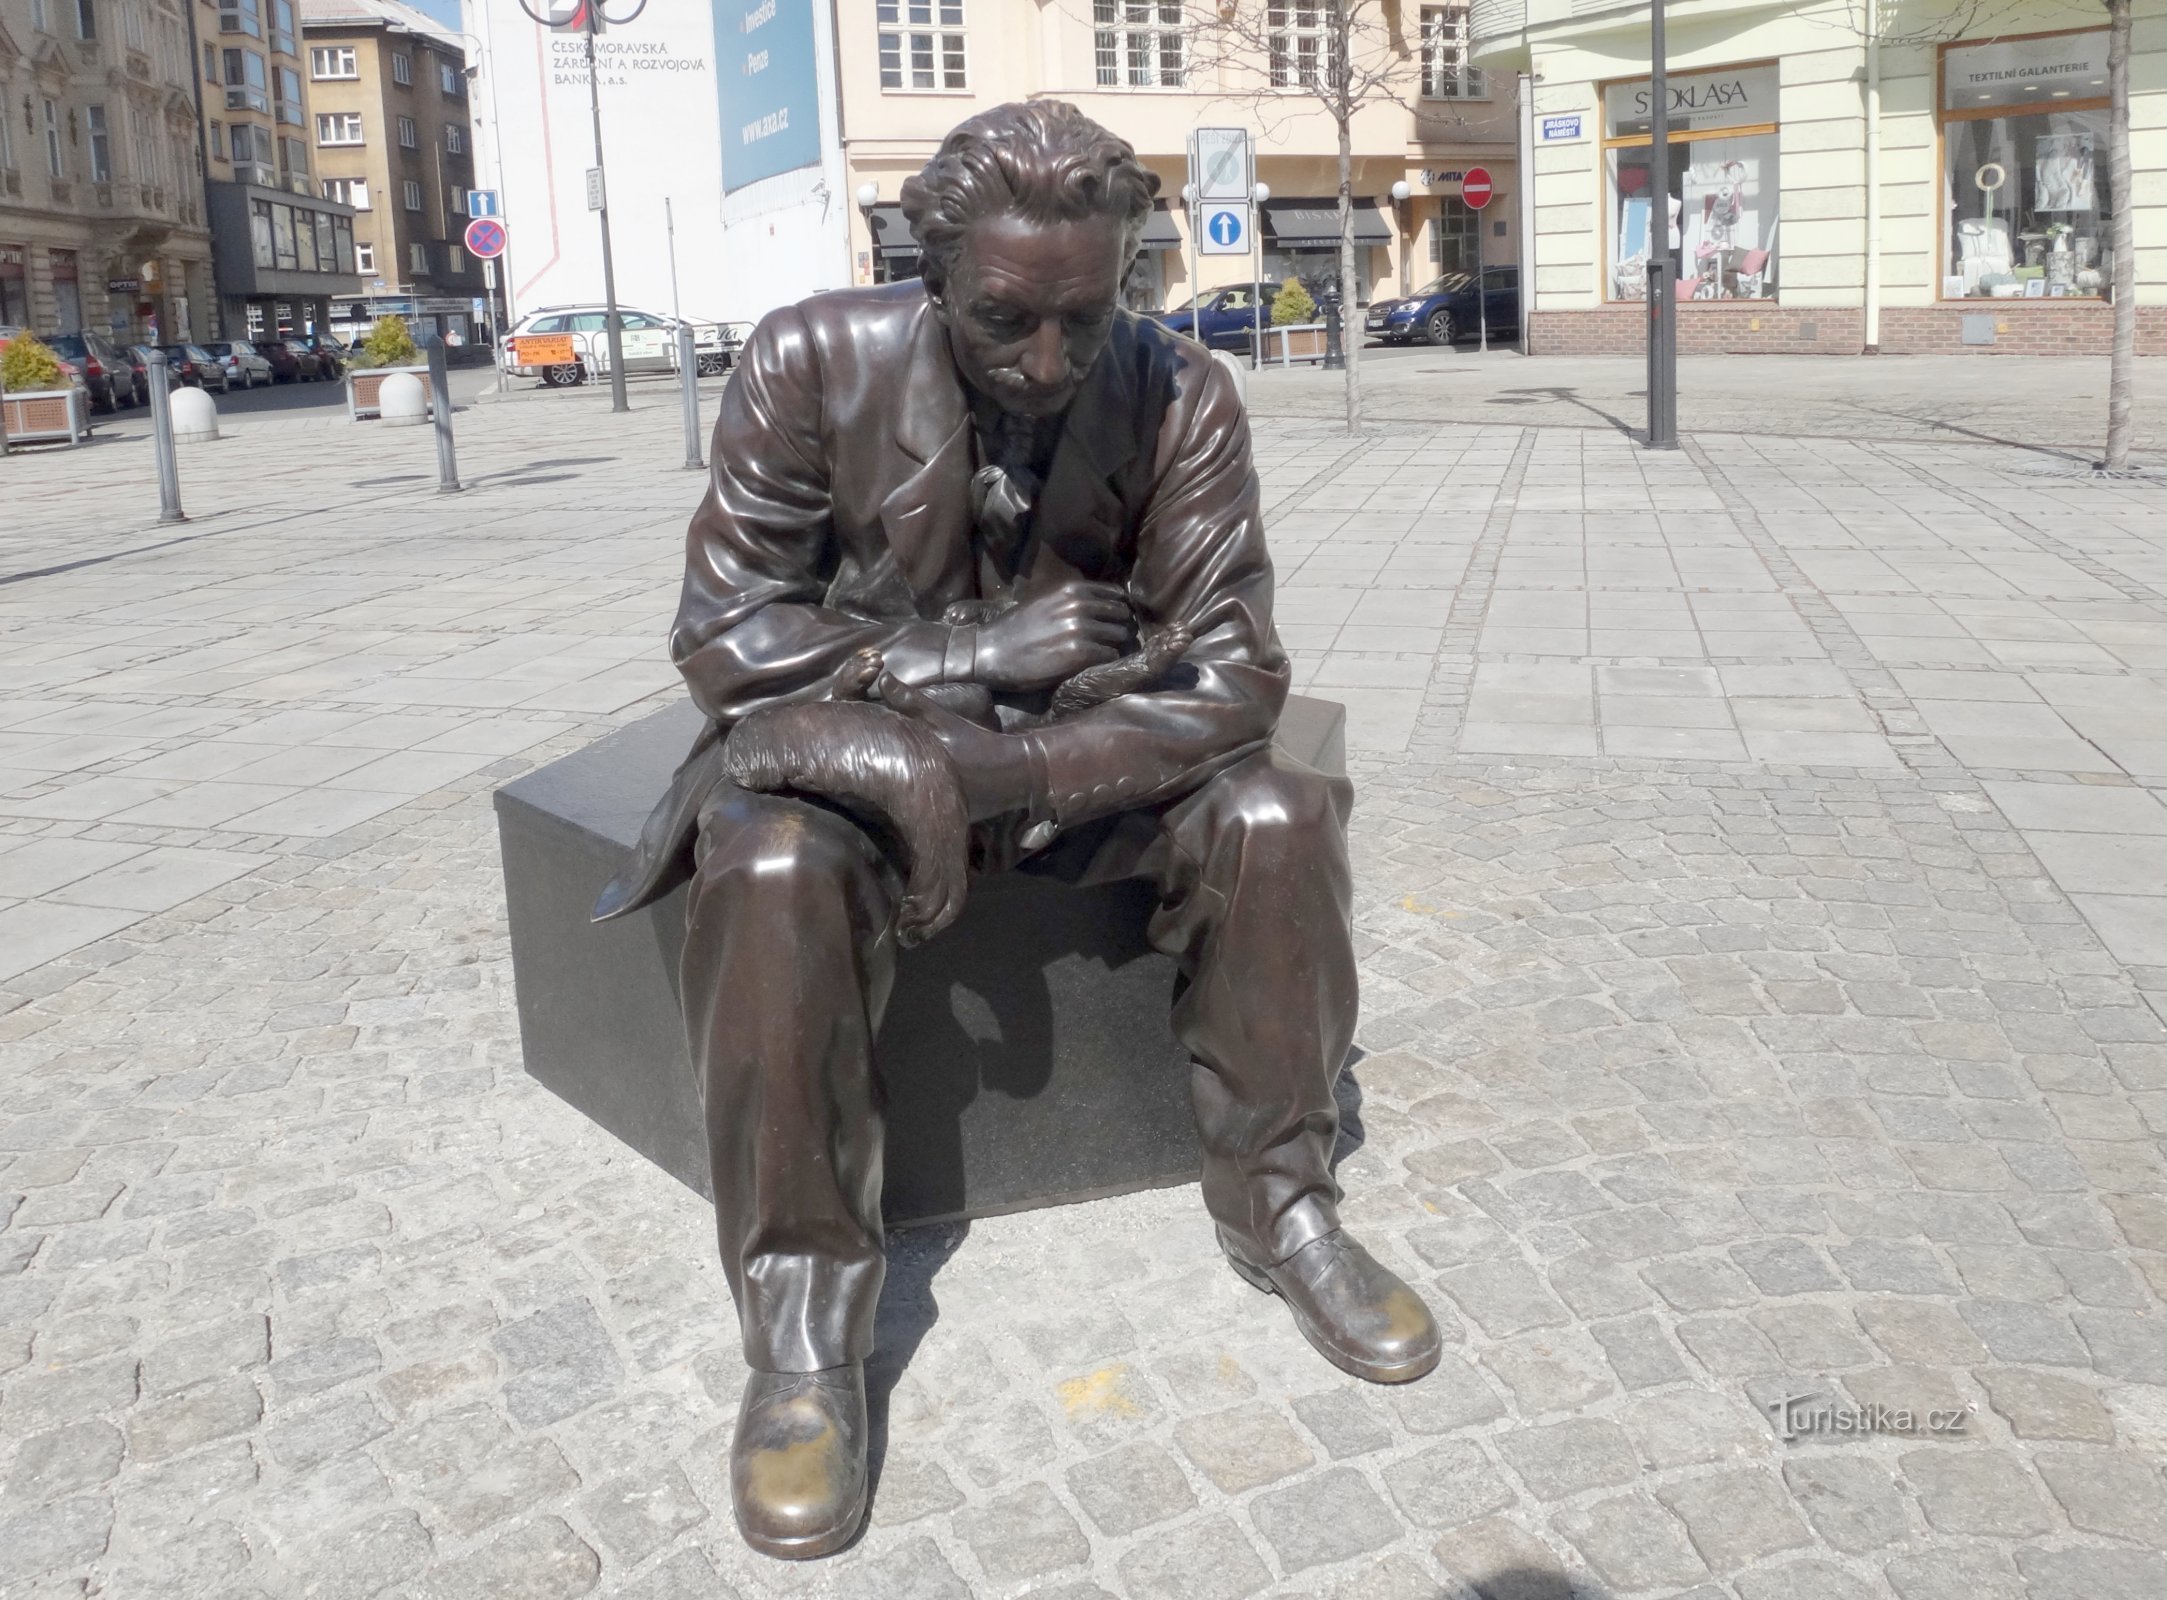 Ostrava - άγαλμα του Leoš Janáček